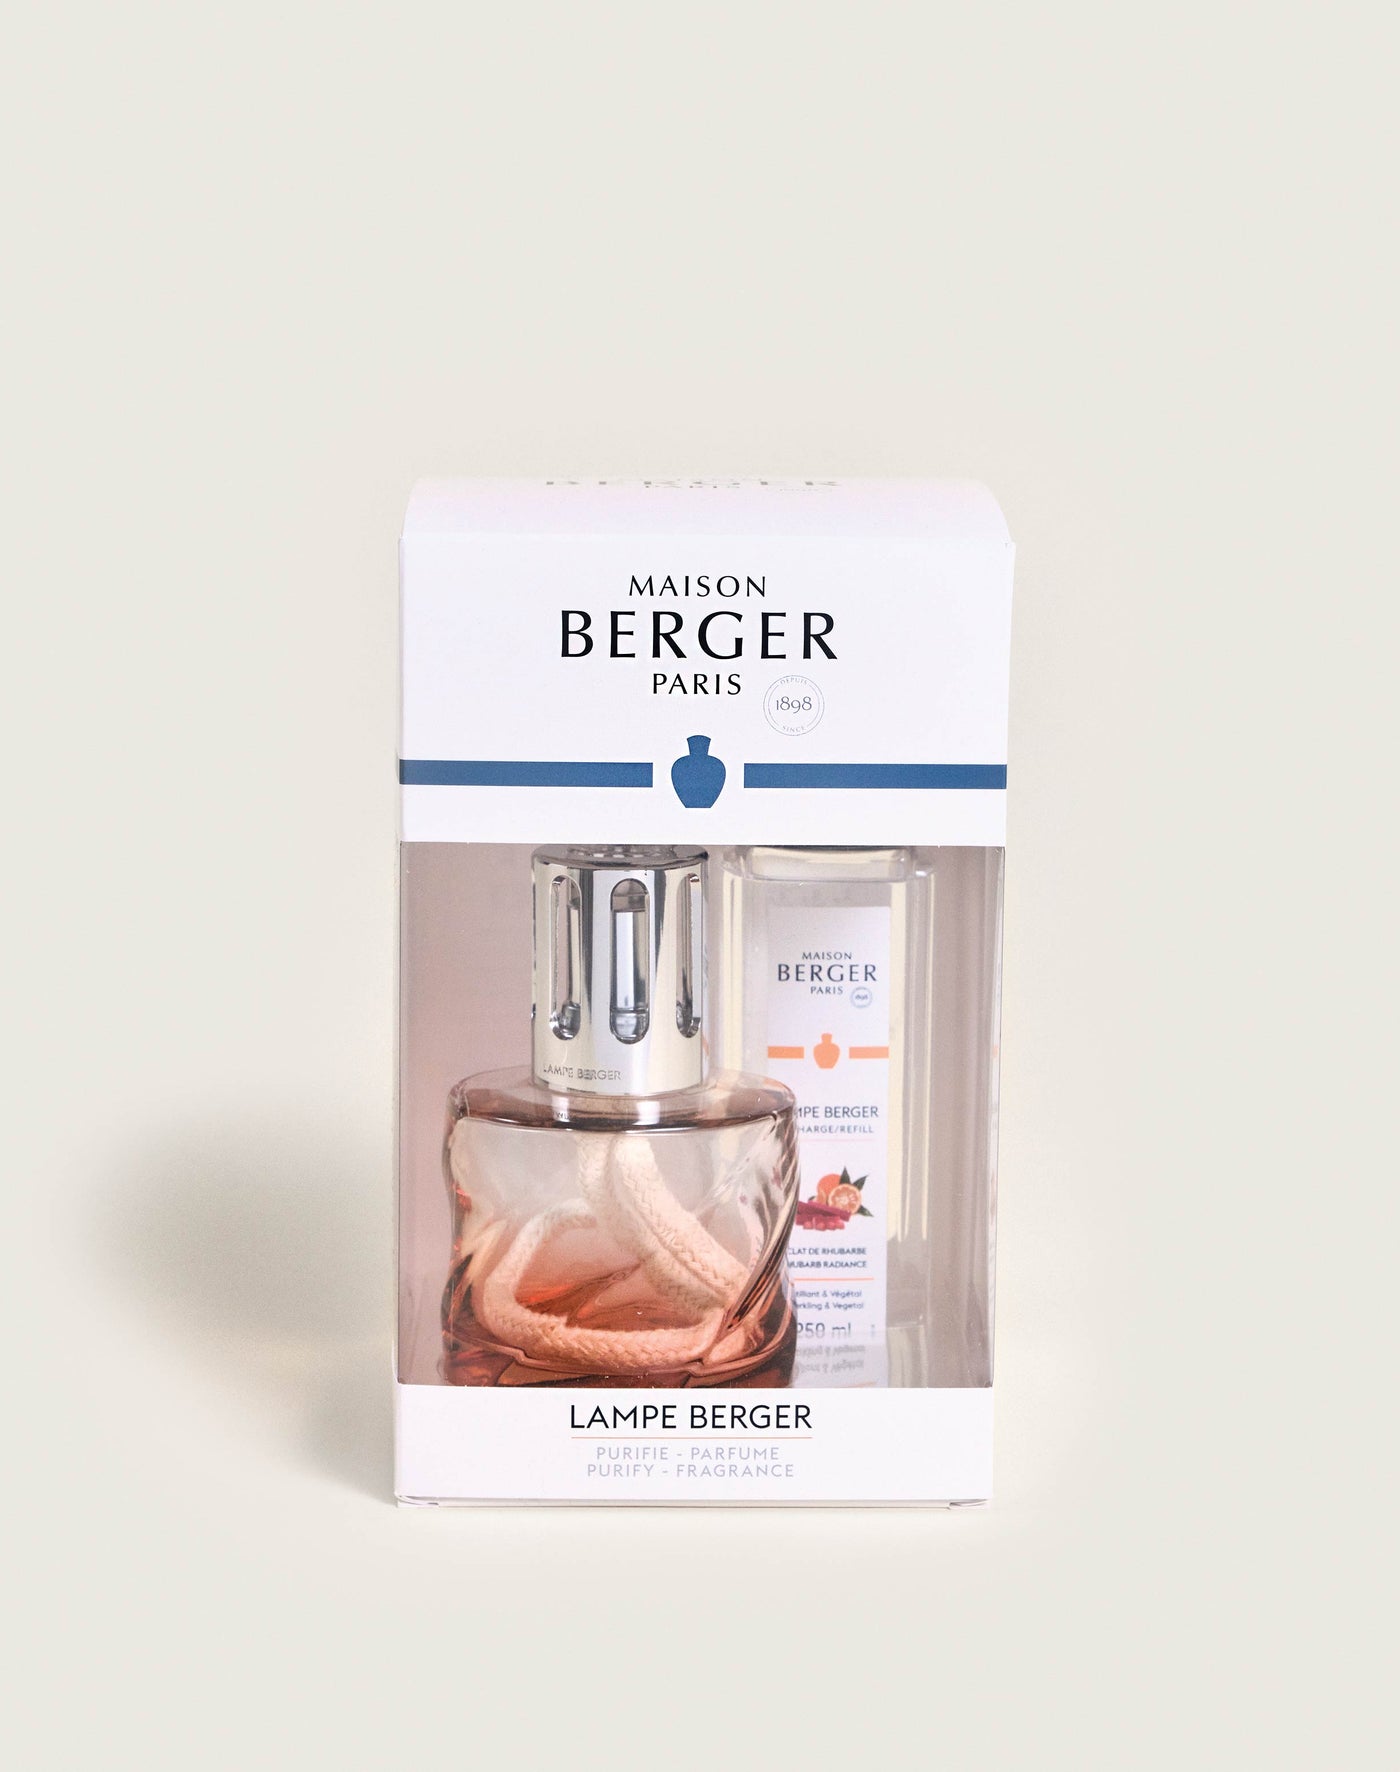 Amber-Pink Spiral Lamp Berger Gift Pack